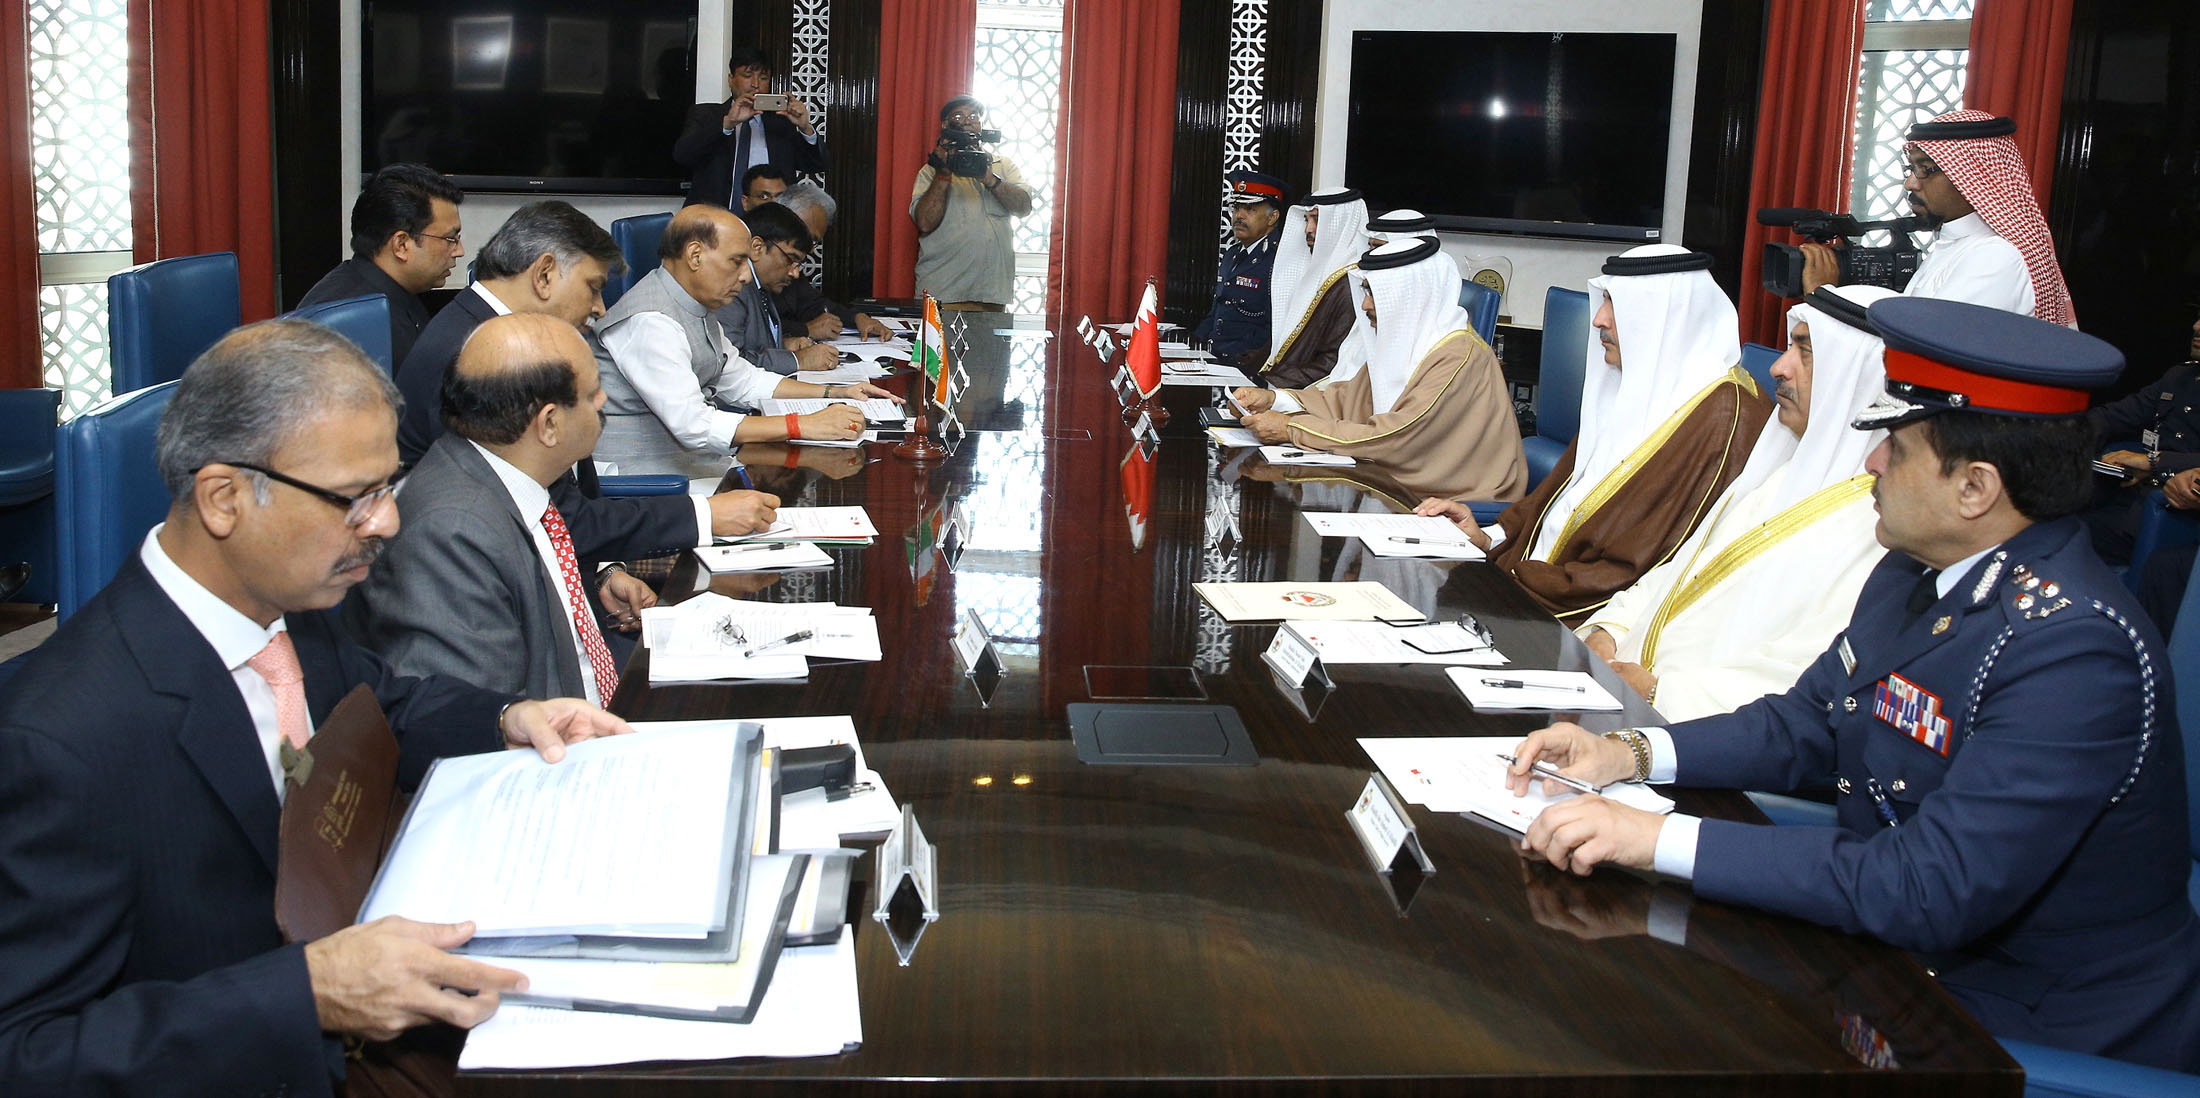 The Union Home Minister, Shri Rajnath Singh meeting the Minister of Interior of Bahrain, Lt. Gen. Sheikh Rashid Bin Abdulla Al Khalifa holding delegation level talks, in Manama on October 24, 2016.